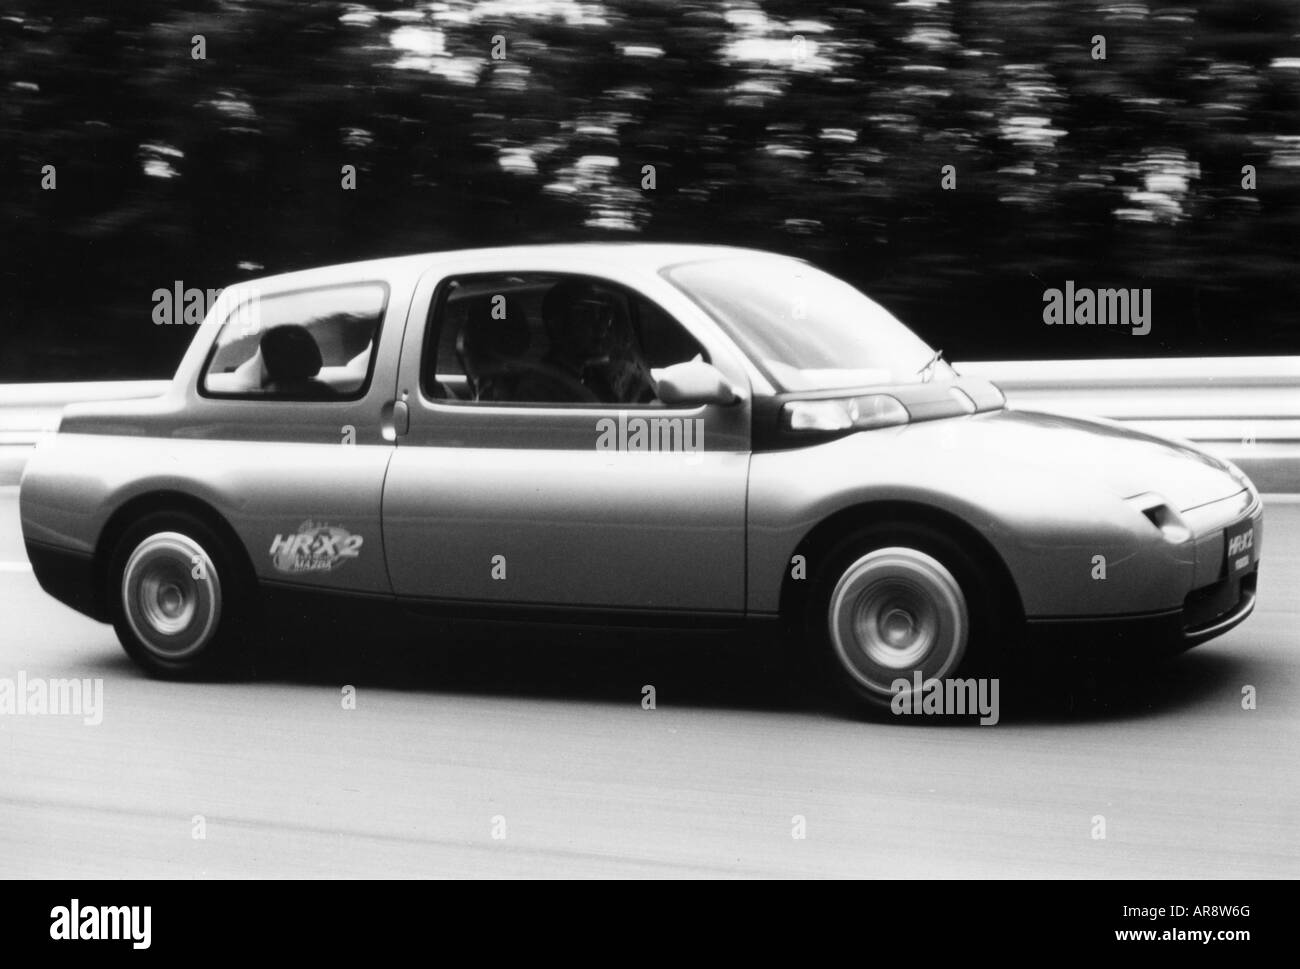 transport / transportation, car, vehicle variants, Mazda, concept car 'HR-X2', 1993, Stock Photo